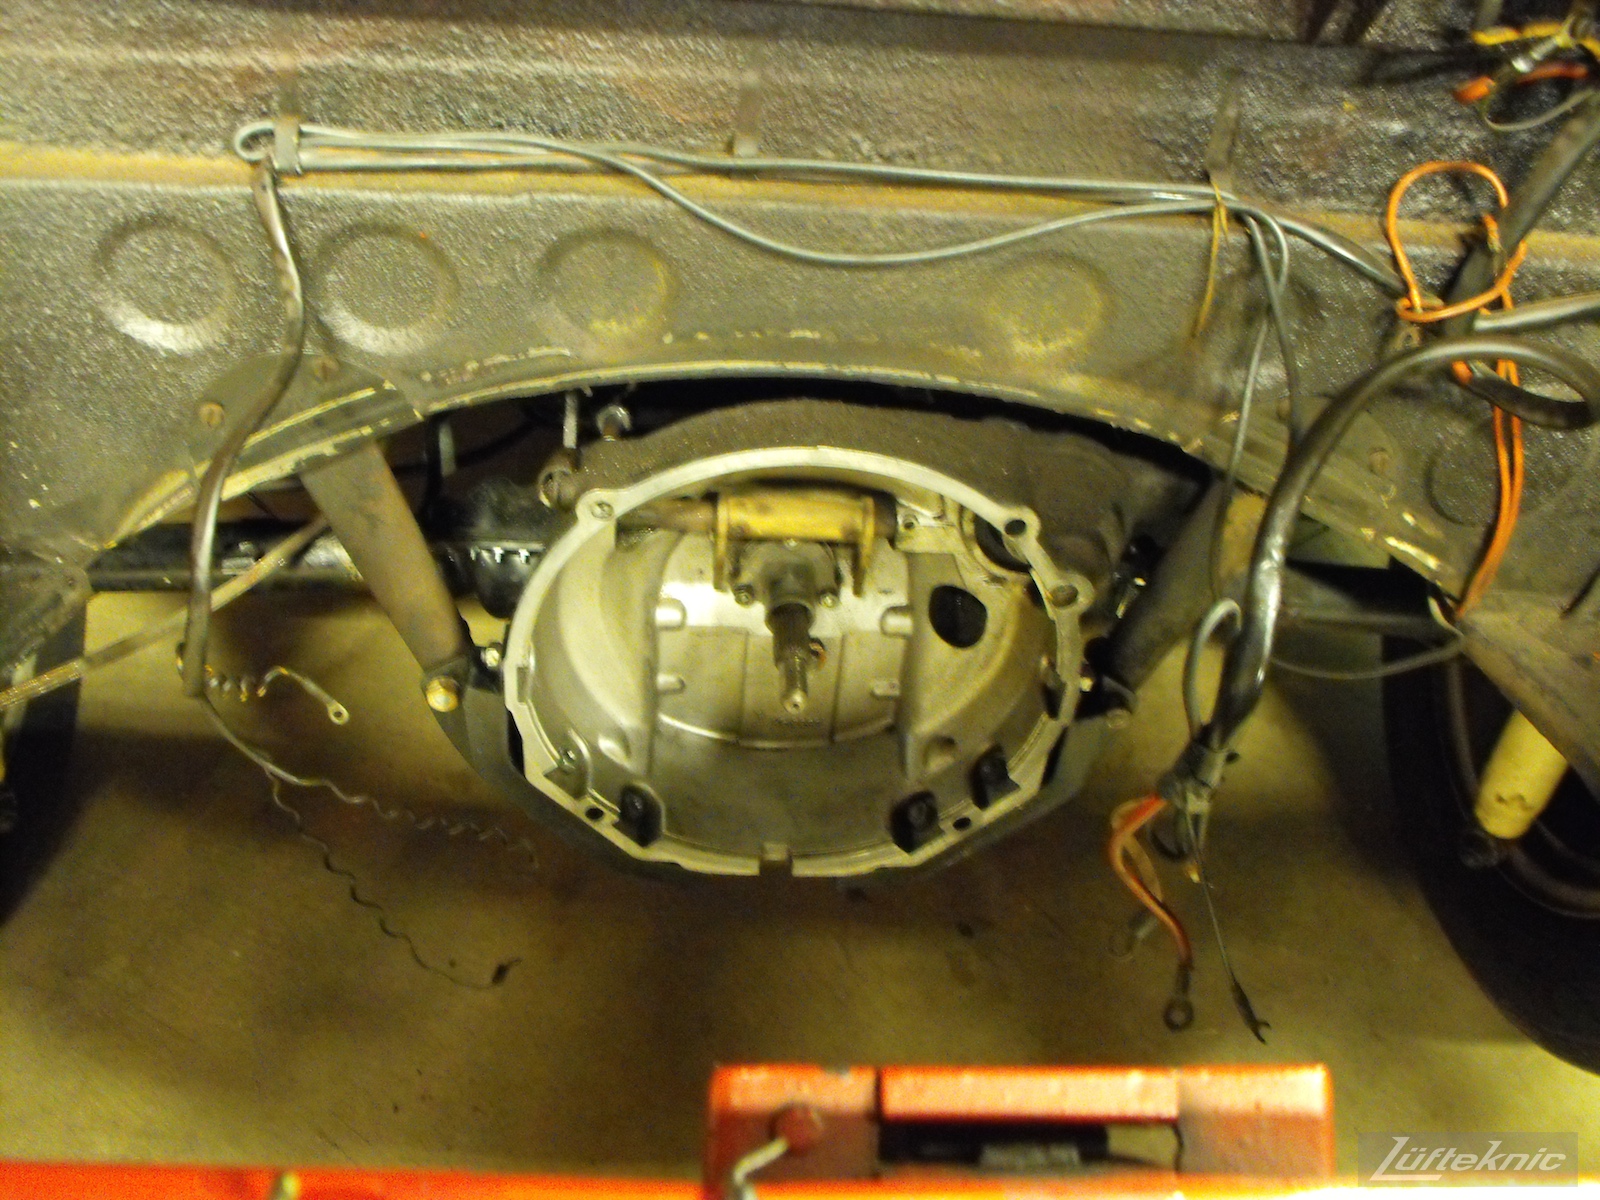 Engine out for a 1961 Porsche 356B Roadster restoration.